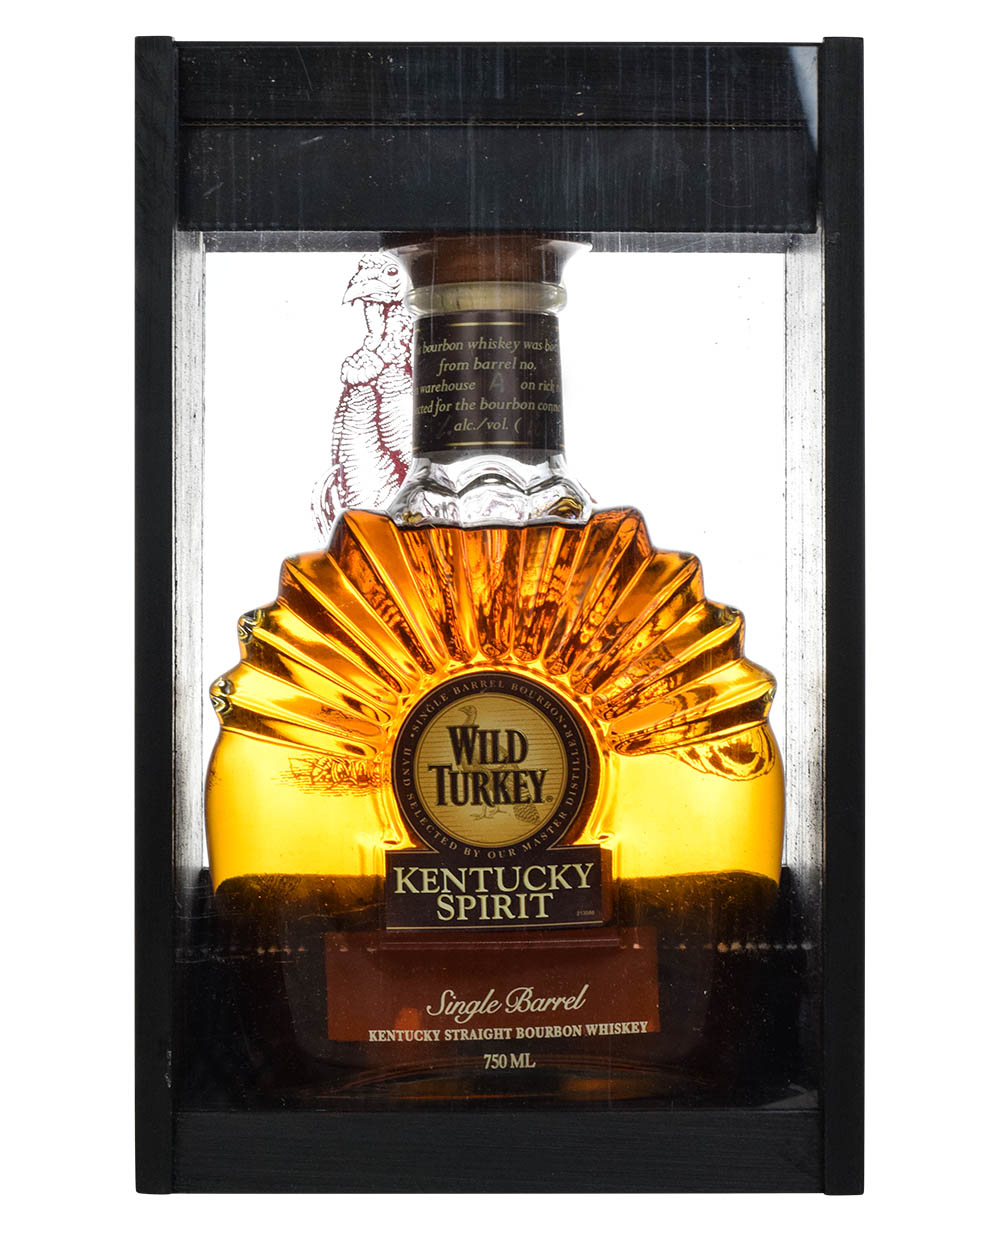 Wild Turkey Kentucky Spirit 2018 Box A Must Have Malts MHM